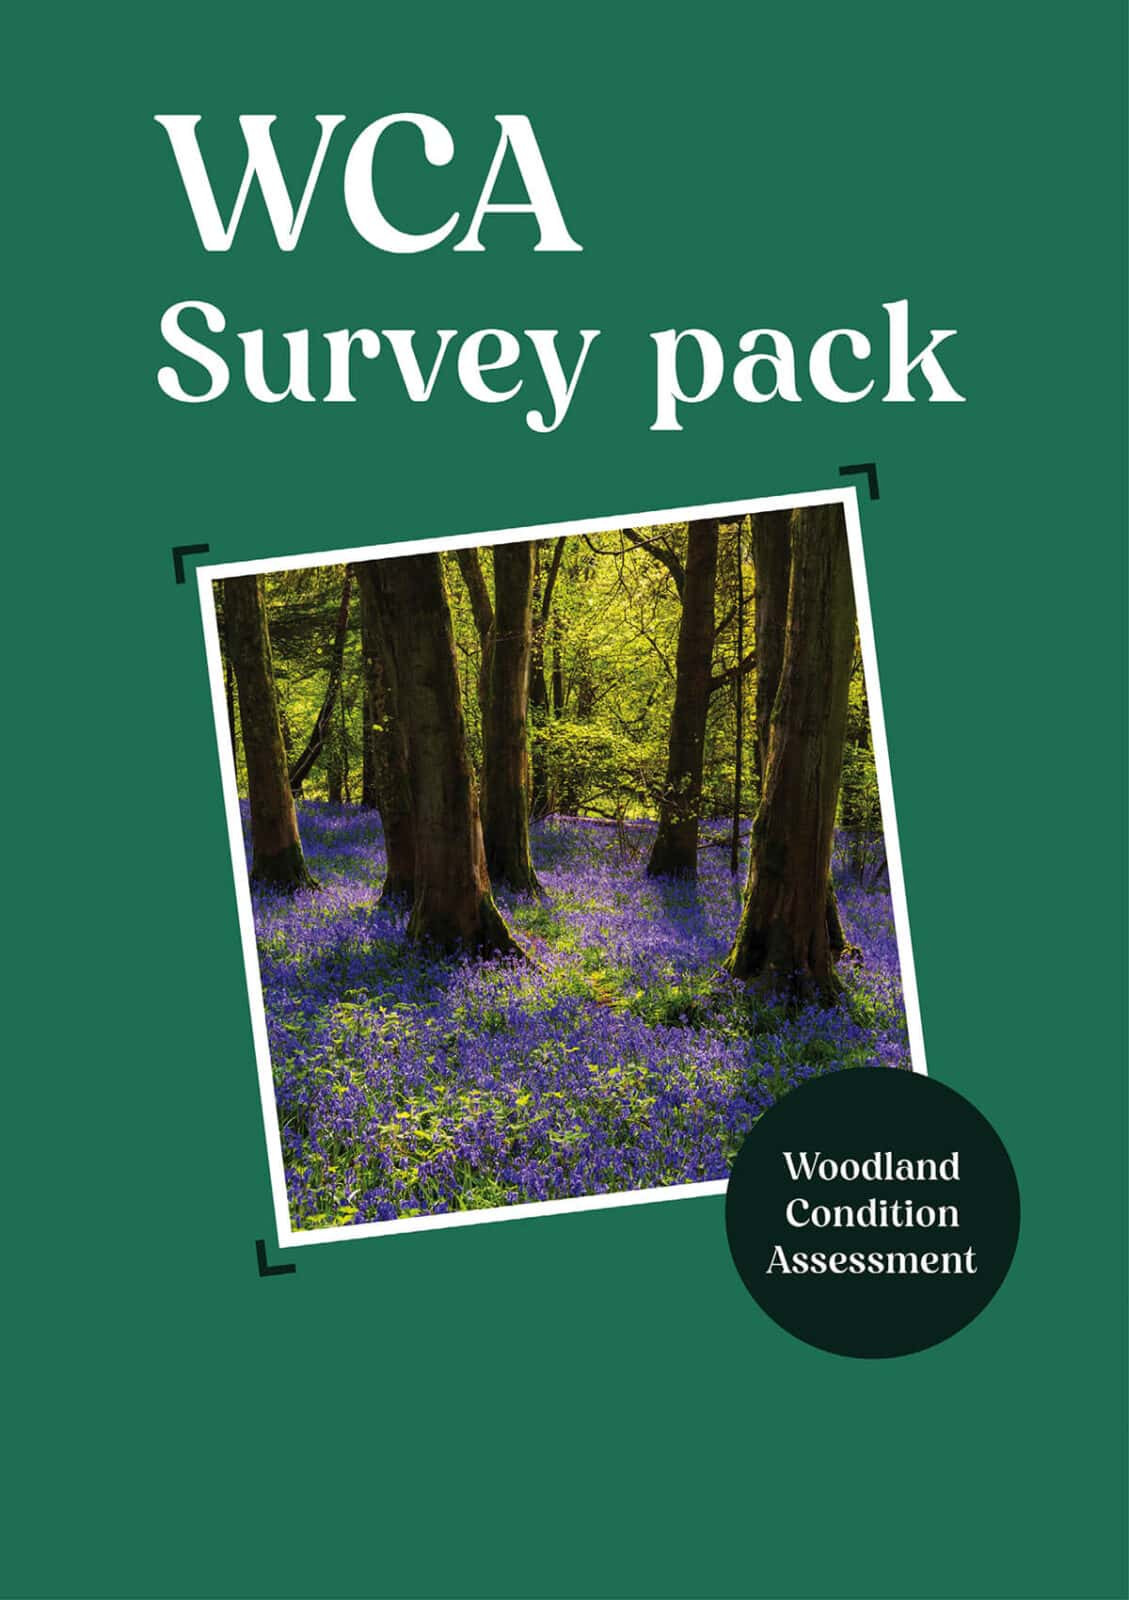 WCA survey pack